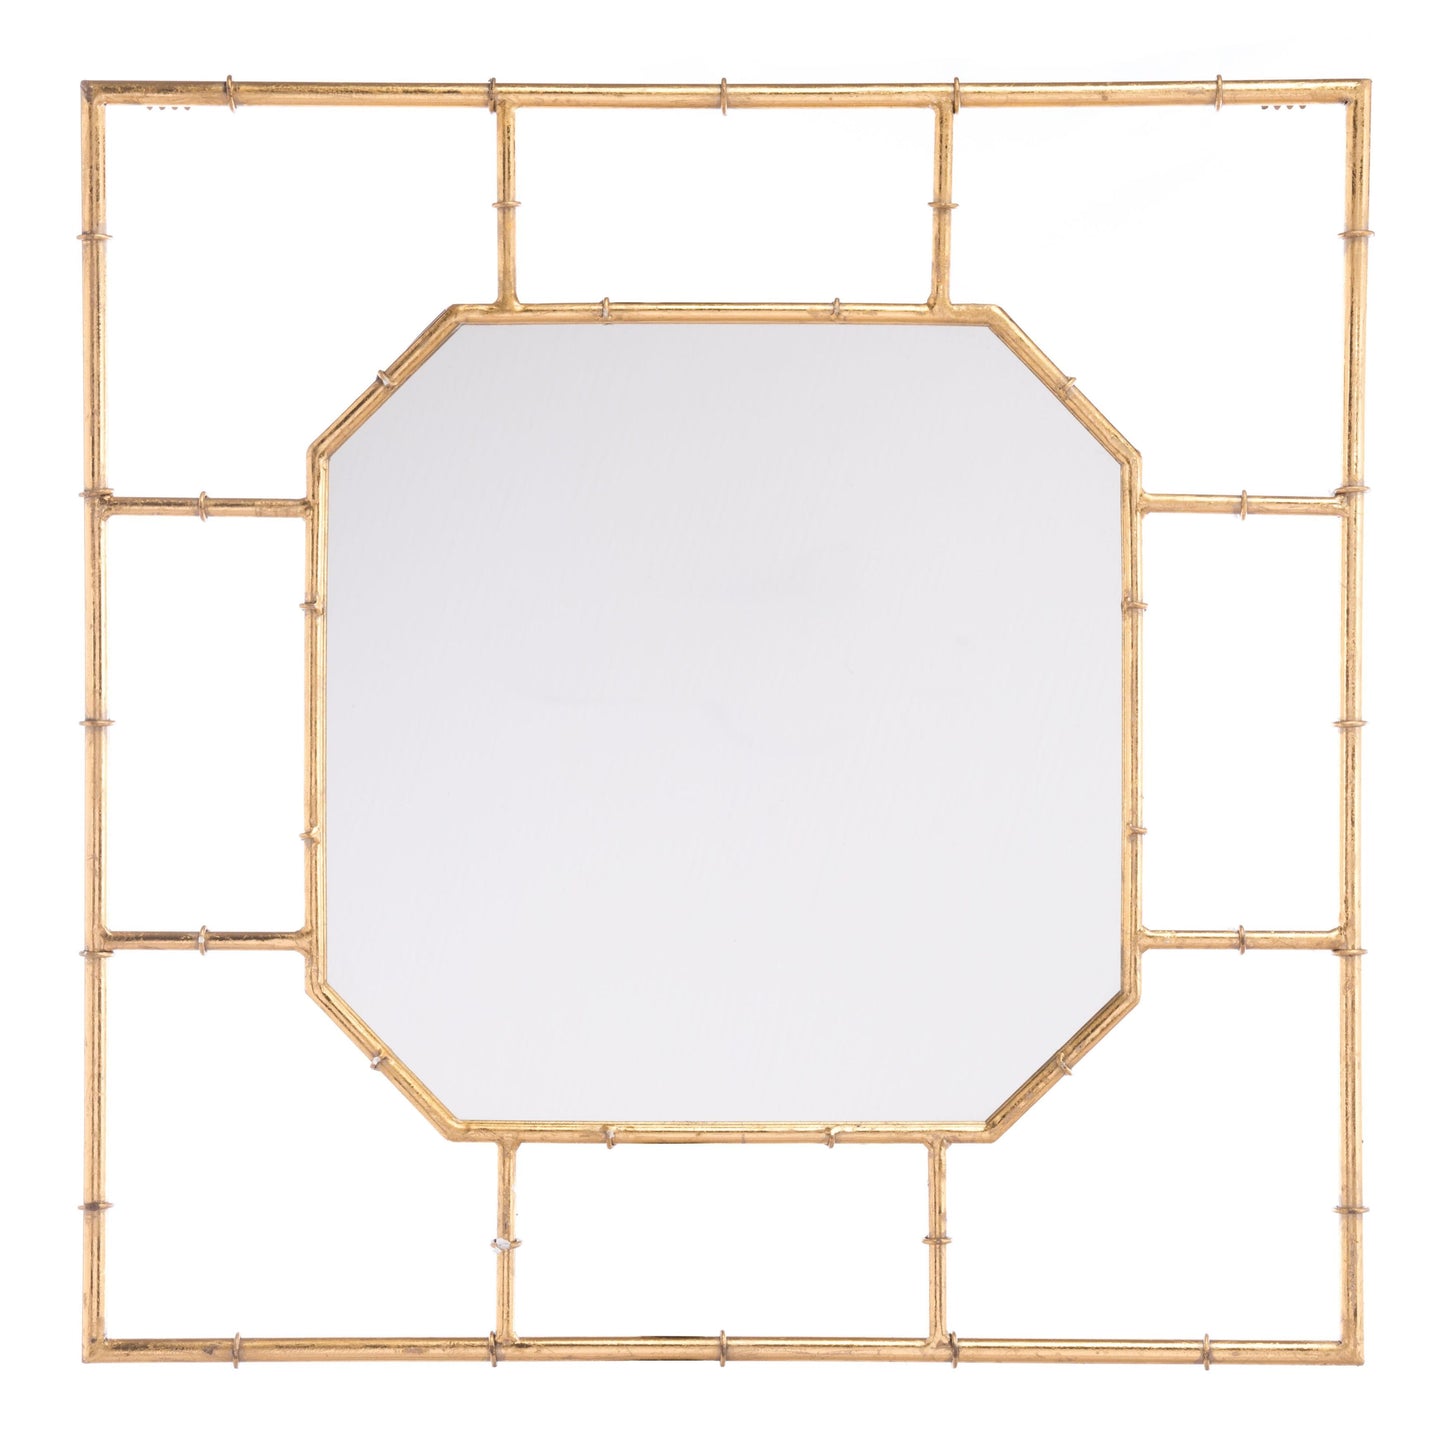 Bamboo Square Mirror Gold